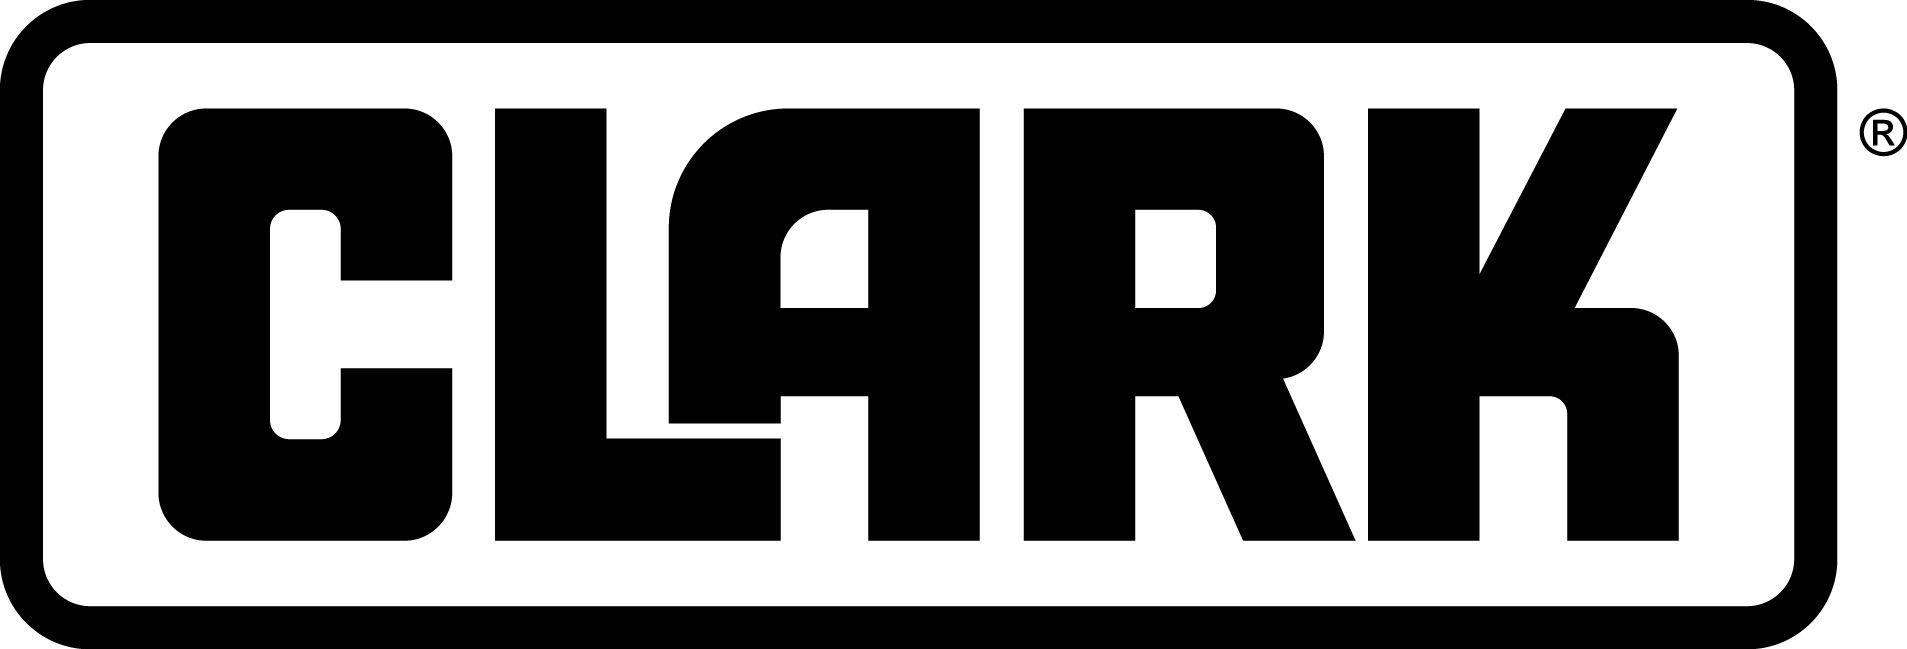 Clark Logo - service.clarkmhc.com - /downloads/CLARK Branding And Advertising/Logos/